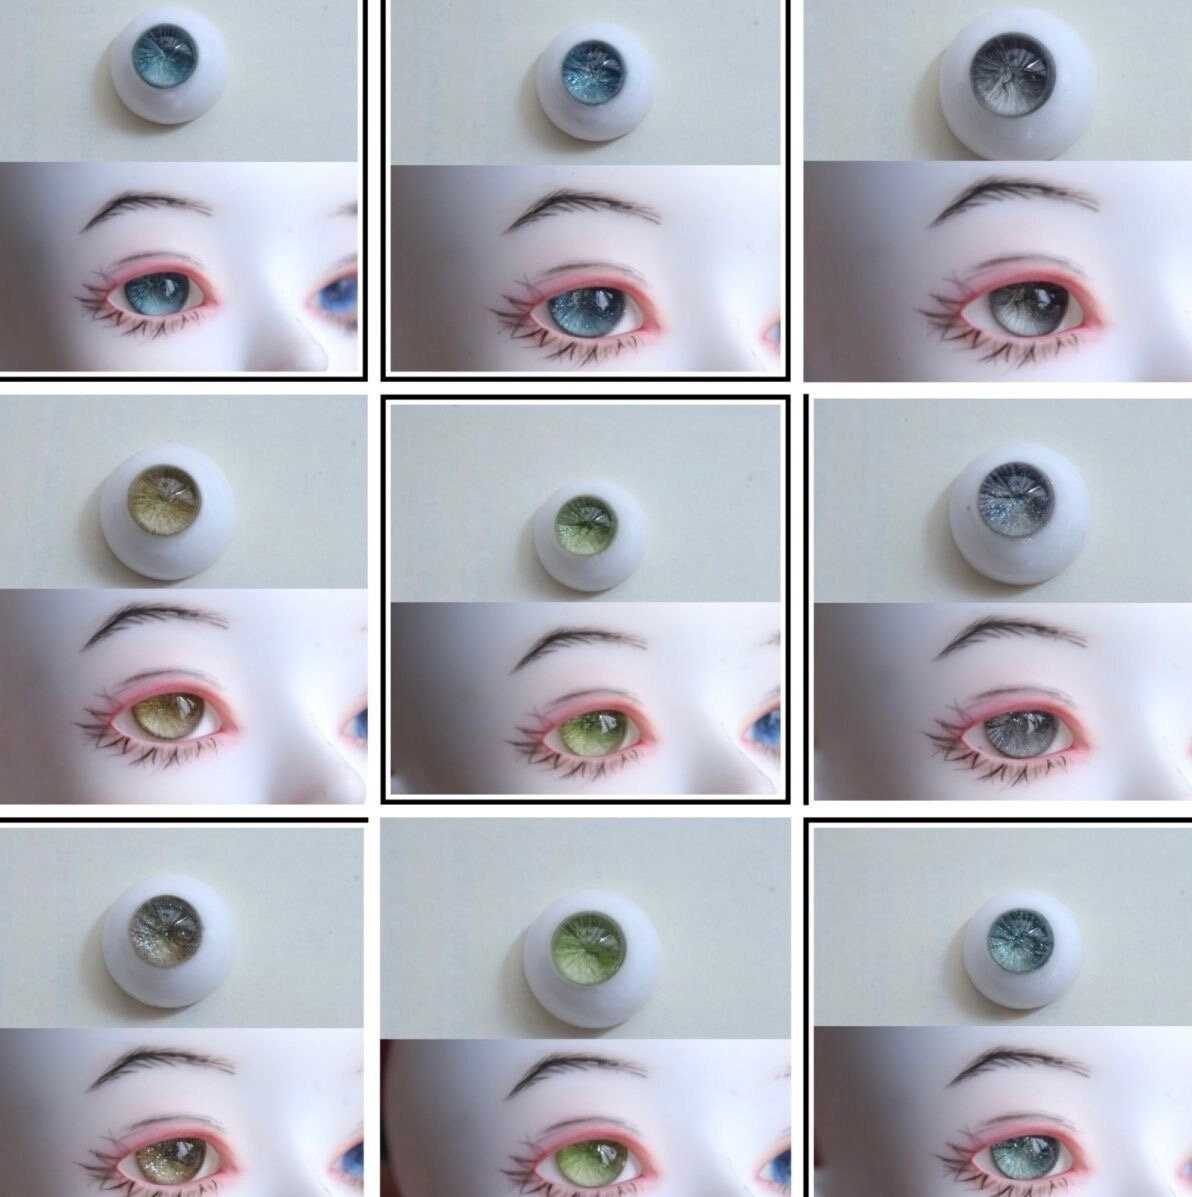  IMGUMI PX-10 Eyeballs for Crafts 10mm,Pure Handmade Design  Glass Fake Eyes, Eyeball 1 Pair,Suitable for Dolls, Masks, Crafts